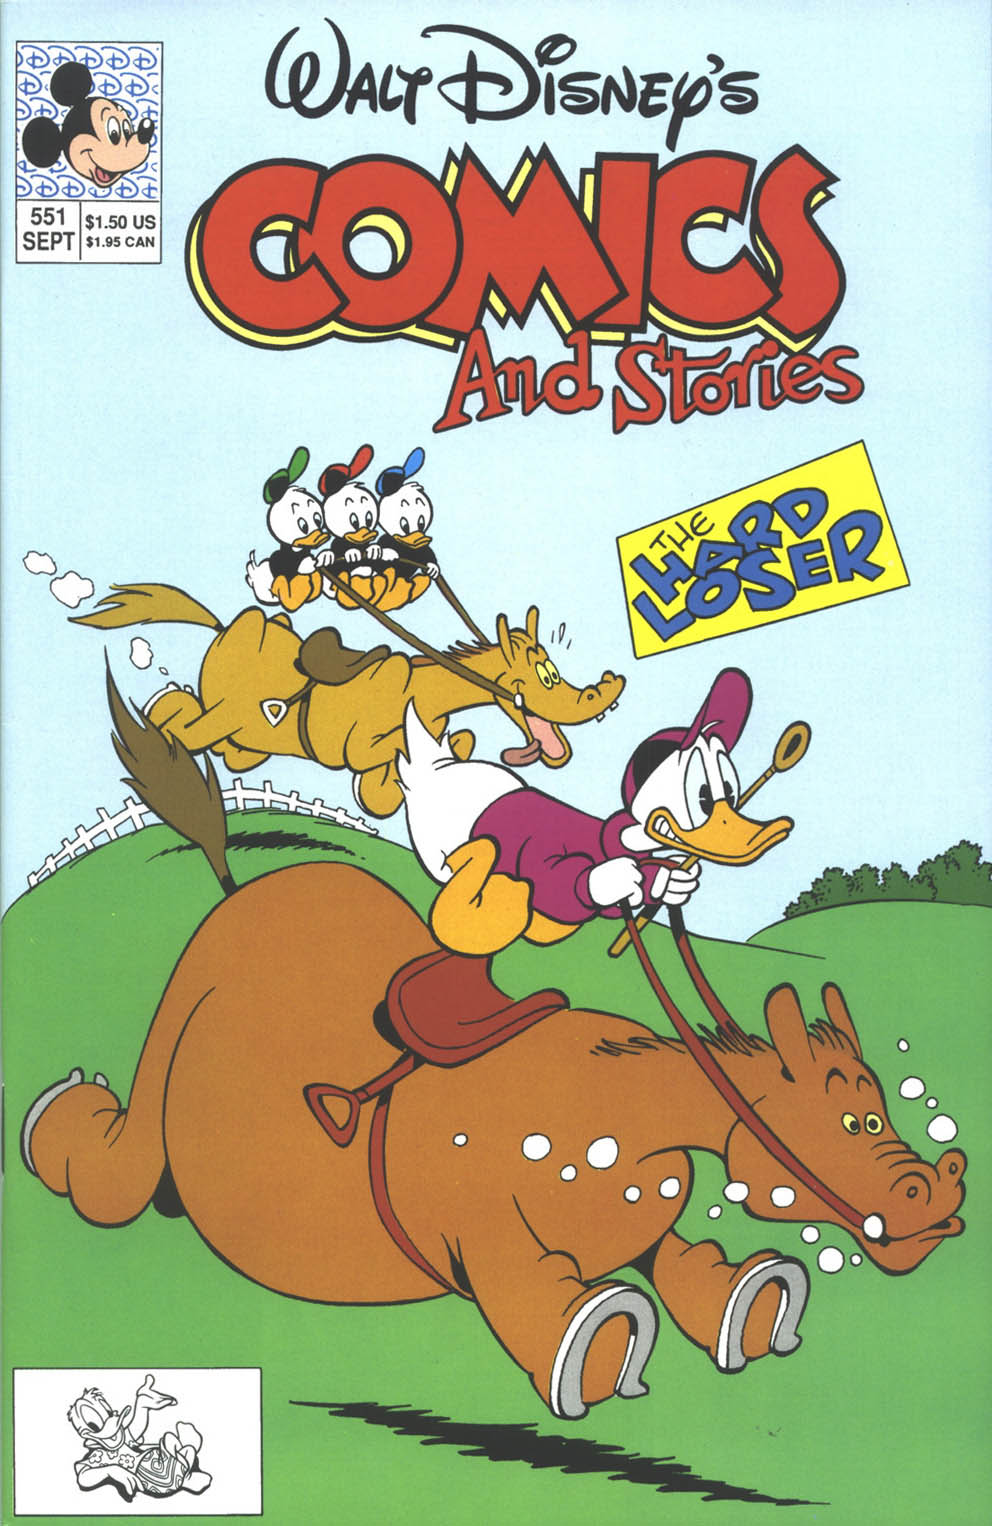 Read online Walt Disney's Comics and Stories comic -  Issue #551 - 1